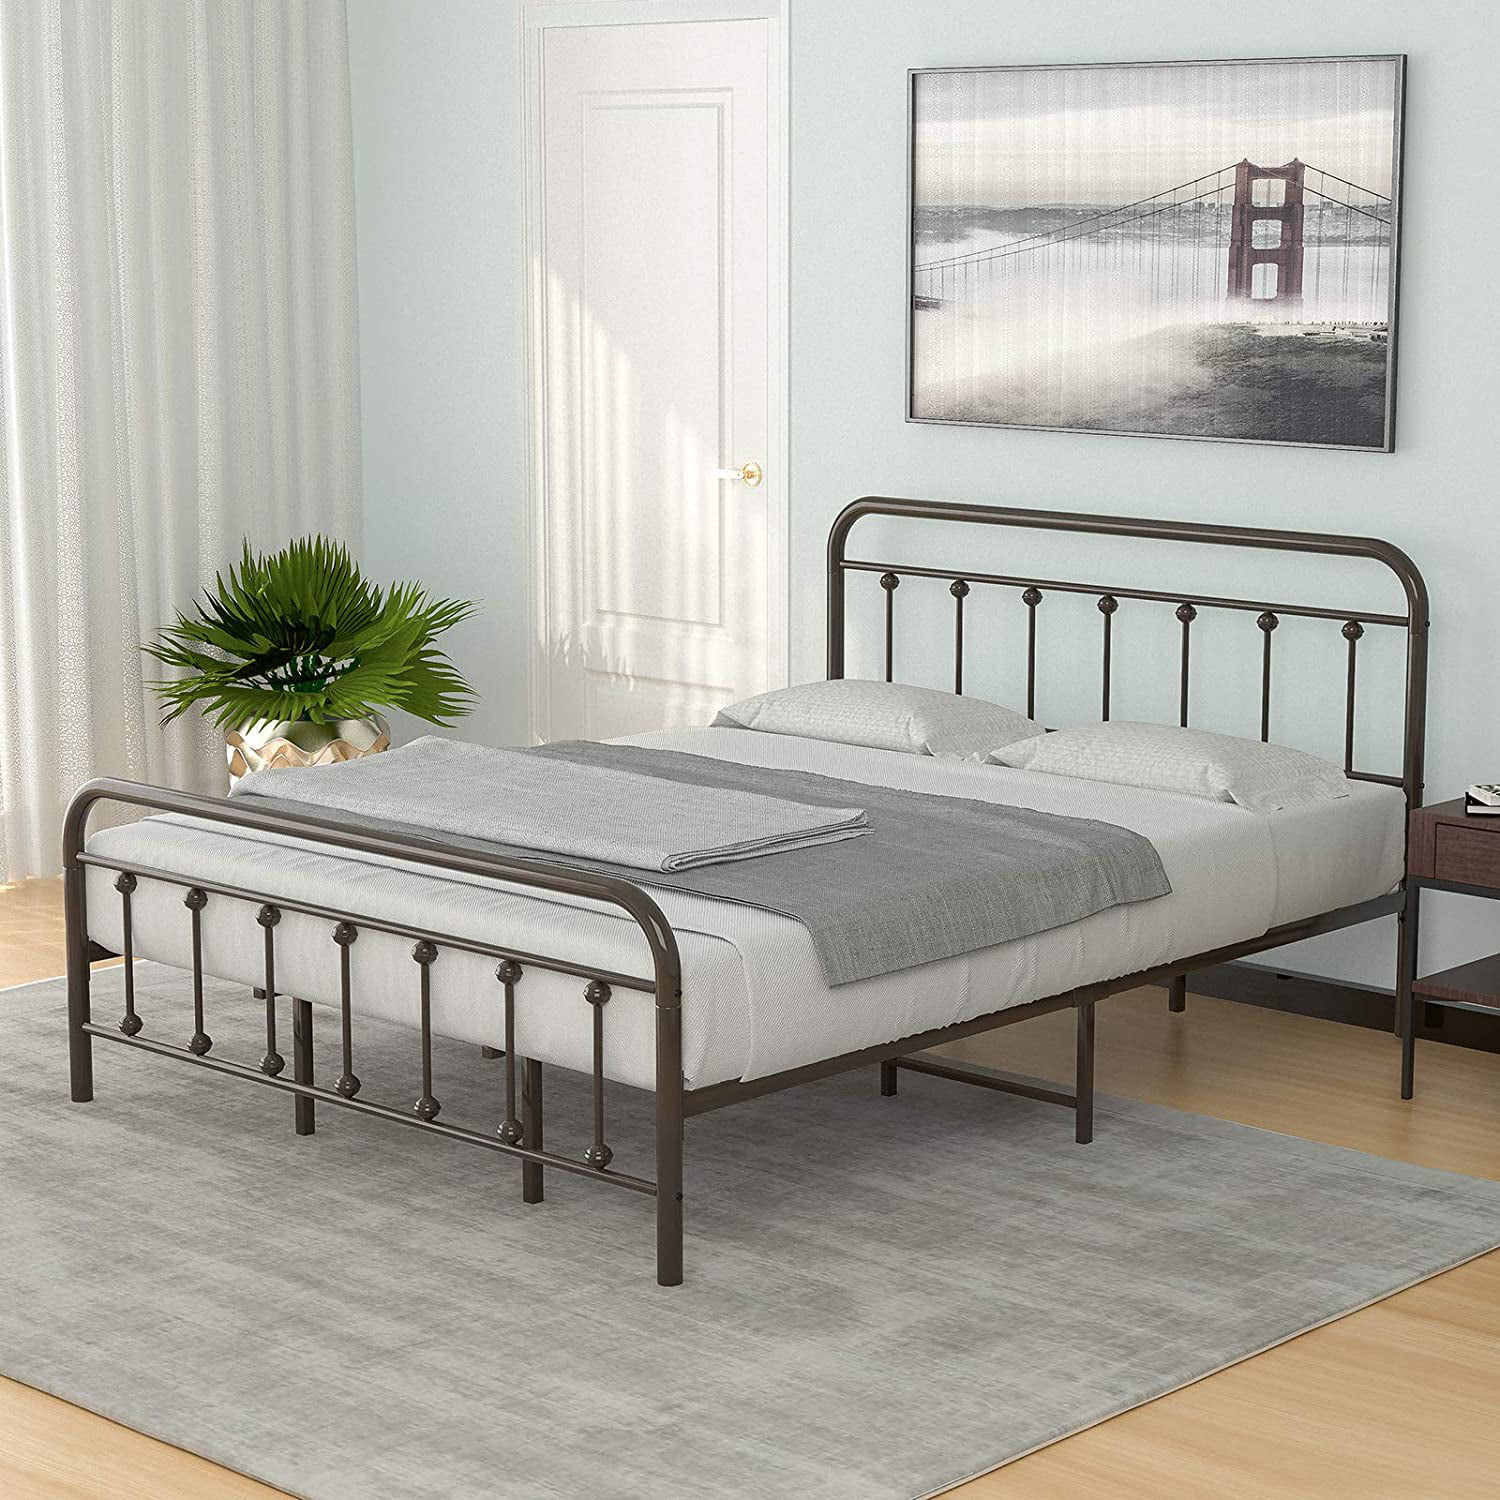 Mecor King Size Metal Platform Bed, King Bed Frame For Box Spring And Mattress